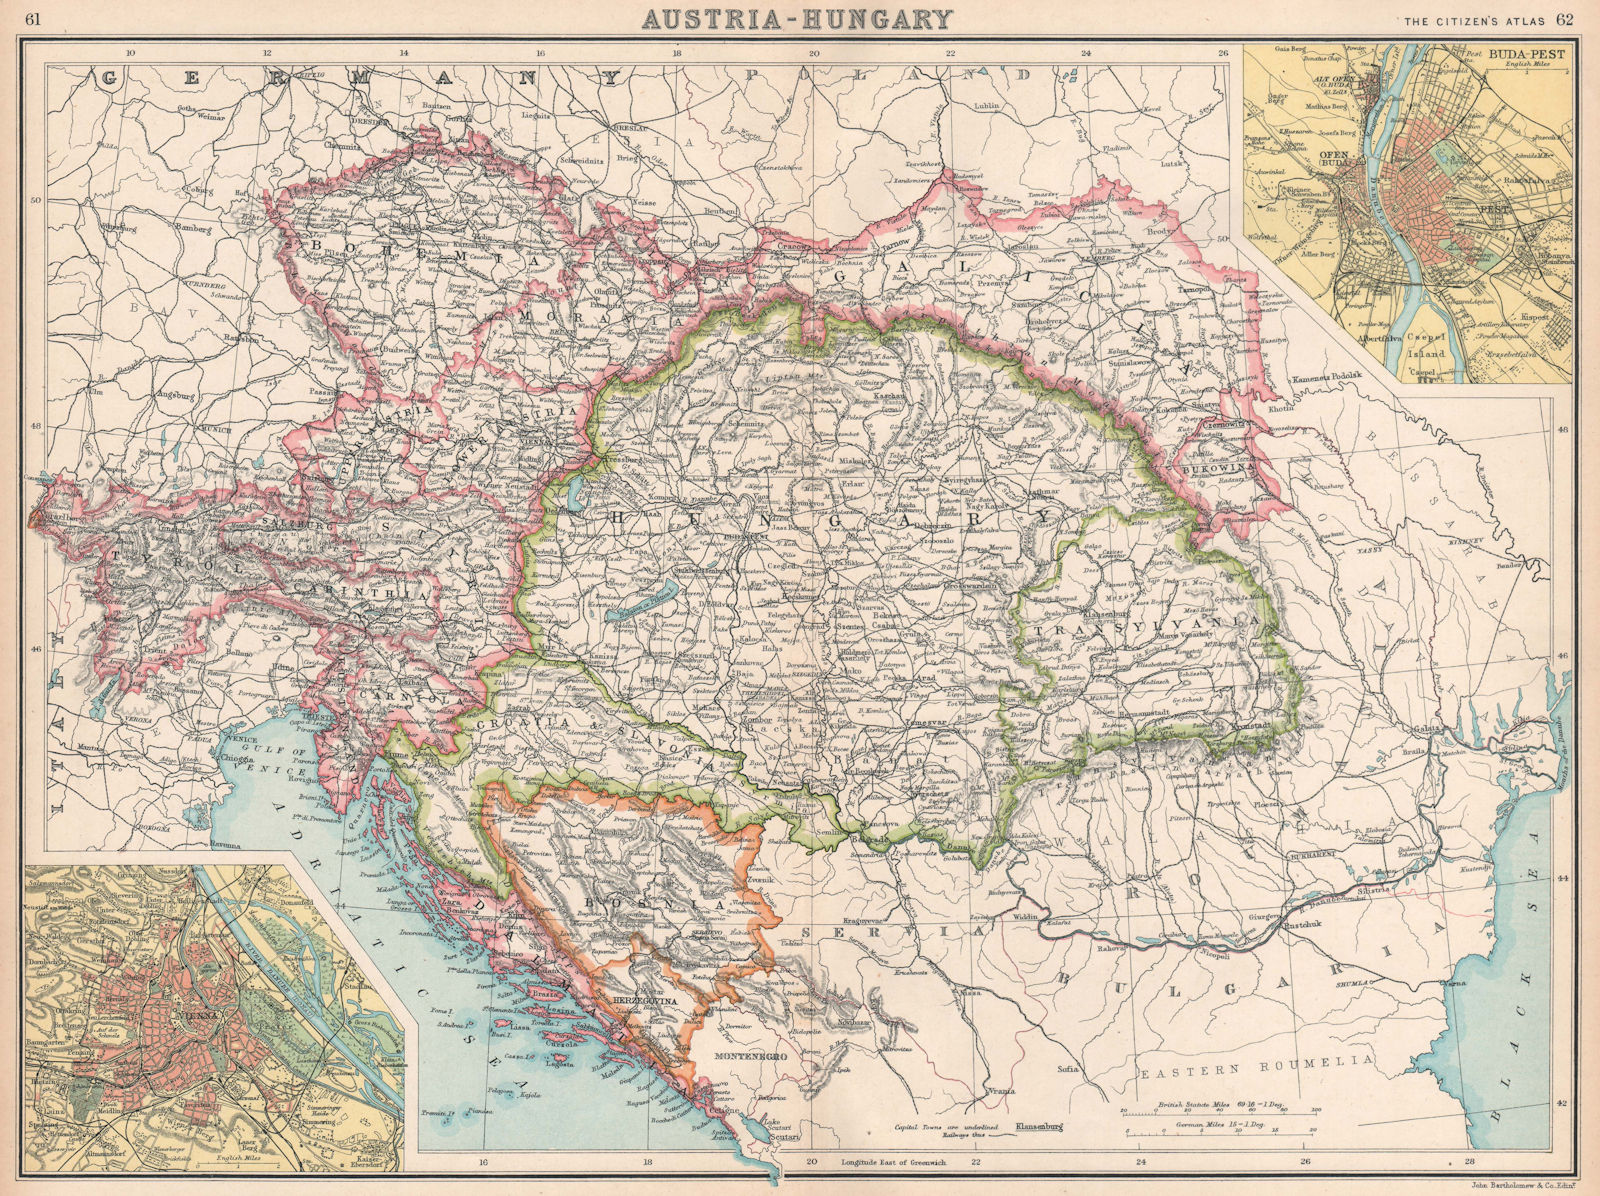 Associate Product AUSTRIA-HUNGARY. Inset Vienna; Ofen (Buda) Pest Budapest. BARTHOLOMEW 1912 map